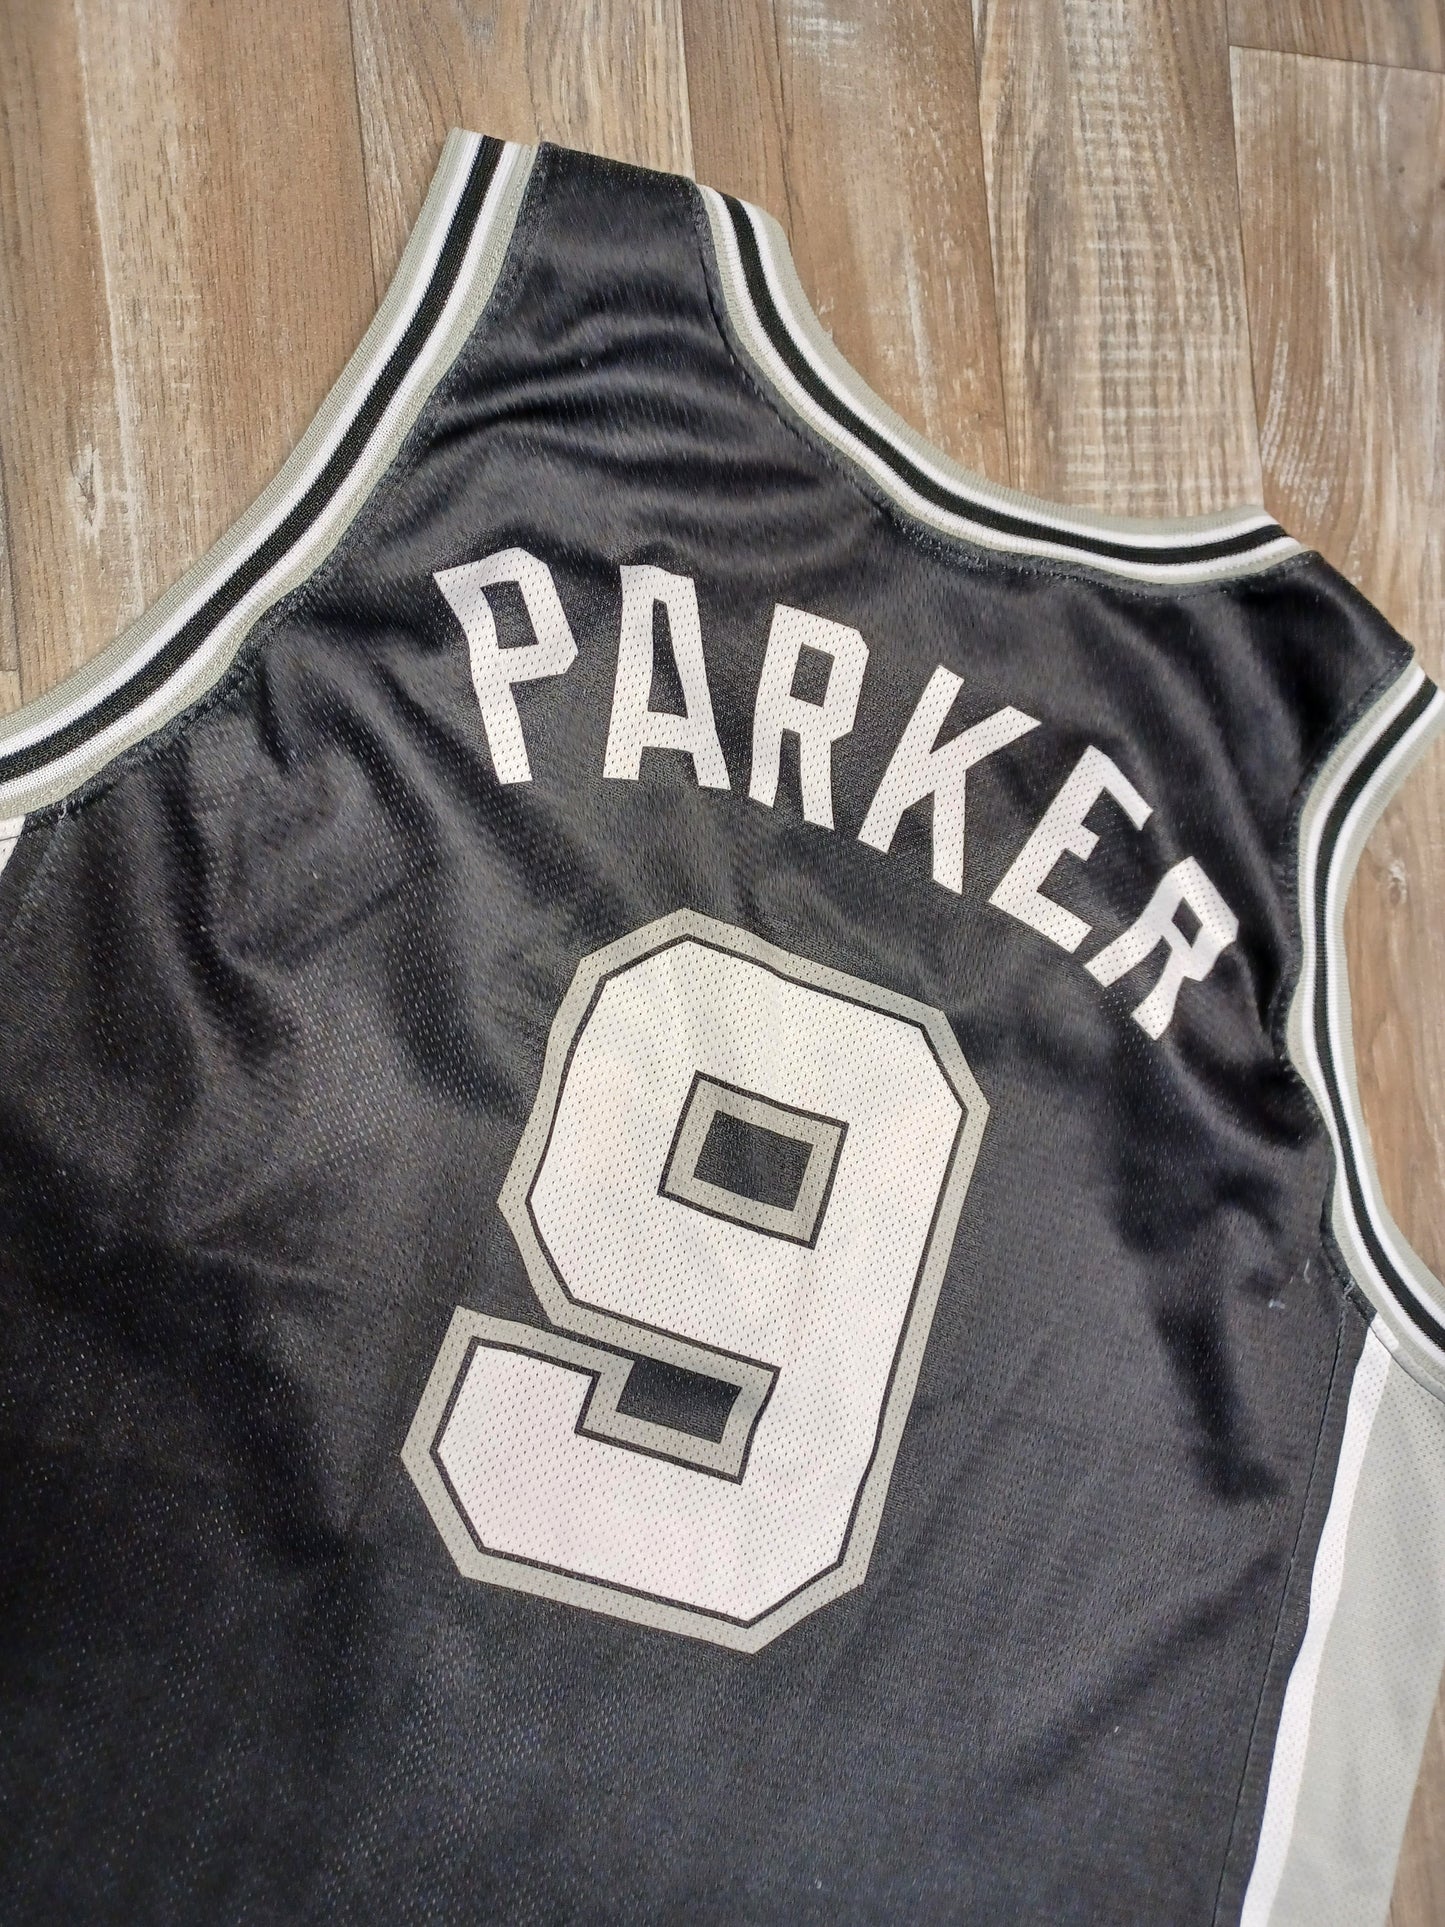 Tony Parker San Antonio Spurs Jersey Size XL